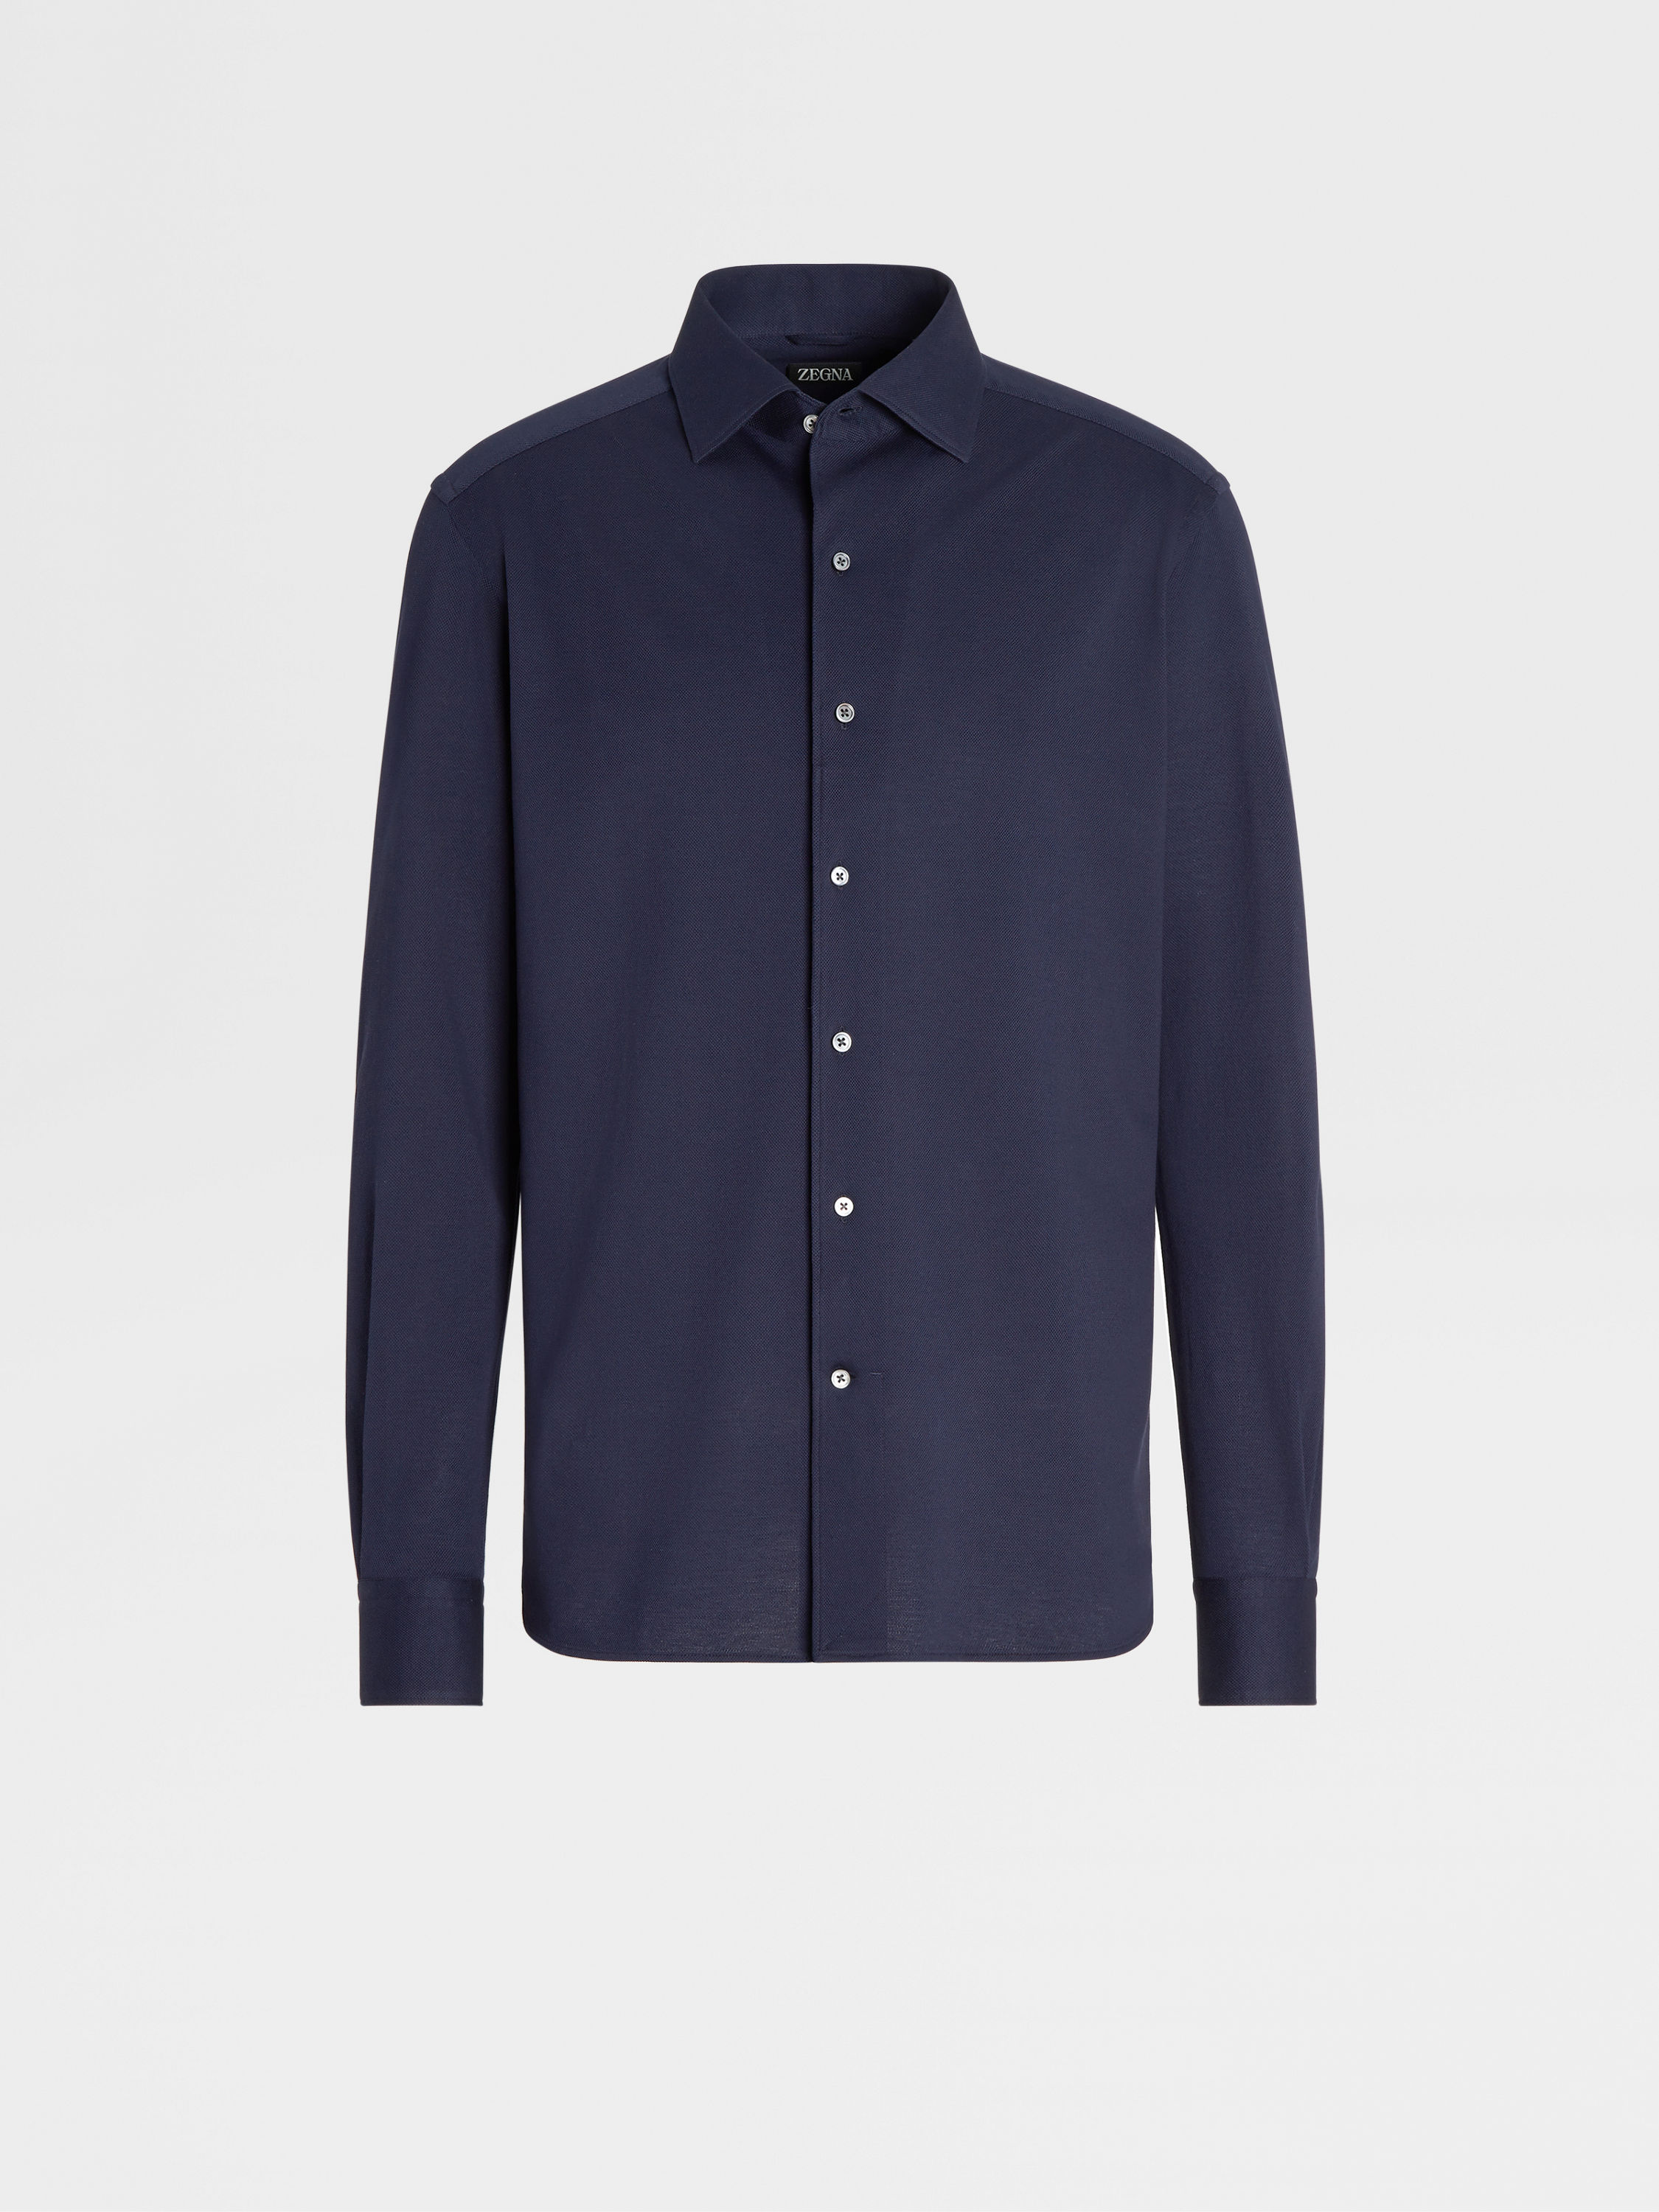 Navy Blue Pure Cotton Jersey Long-sleeve Shirt FW23 25651240 | Zegna GB